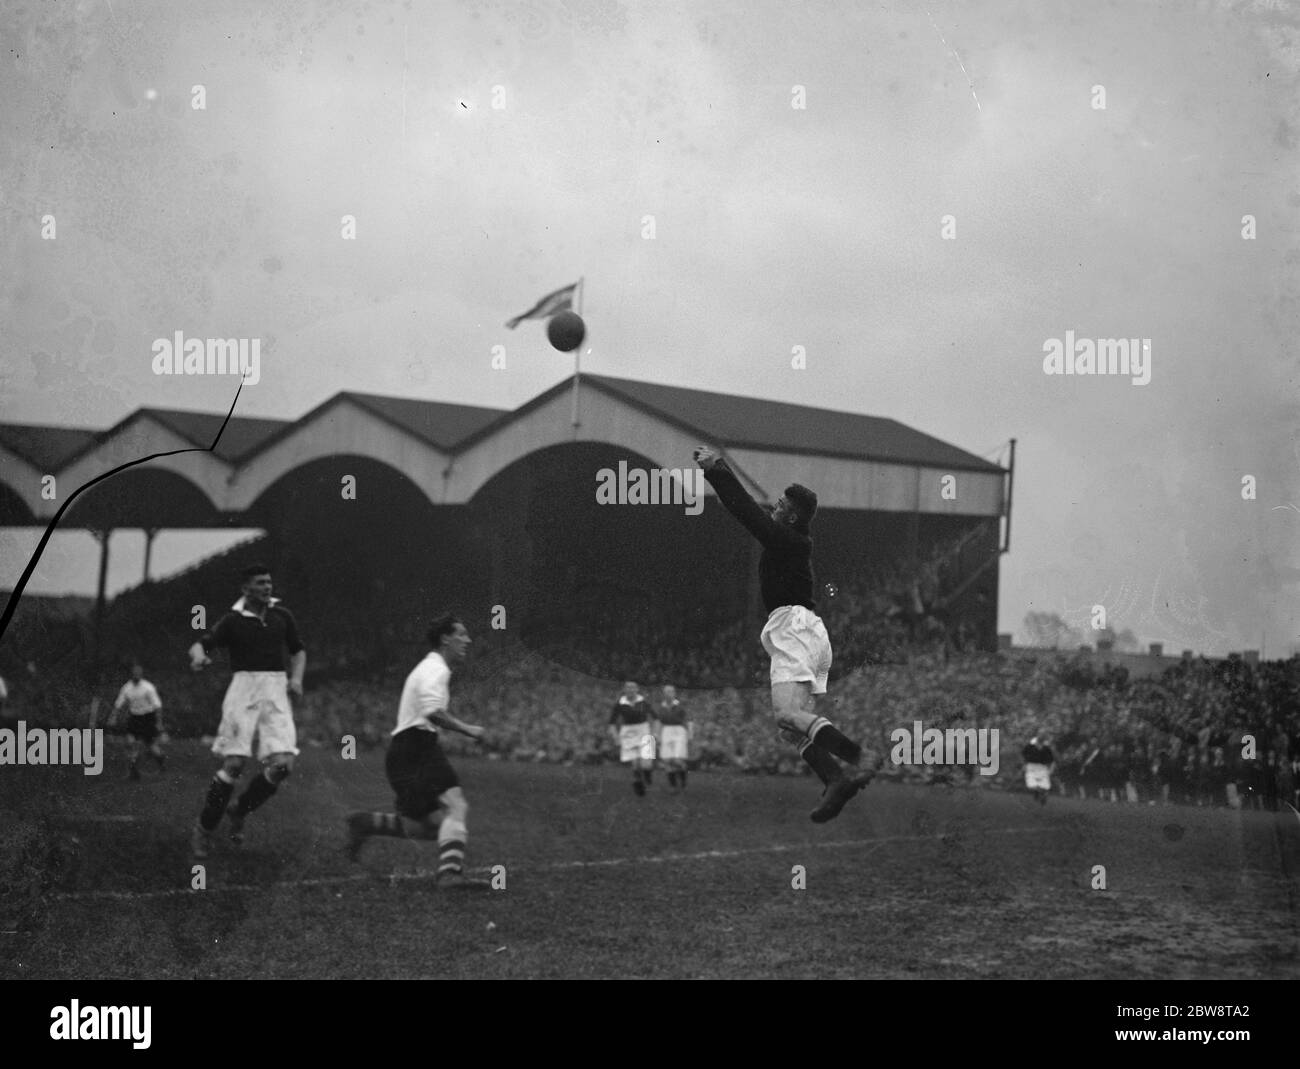 Fußballspiel: Arsenal Football Club gegen Charlton Athletic Football Club im Highbury Stadium, London. Torhüter schlägt den Ball weg. 1936 Stockfoto